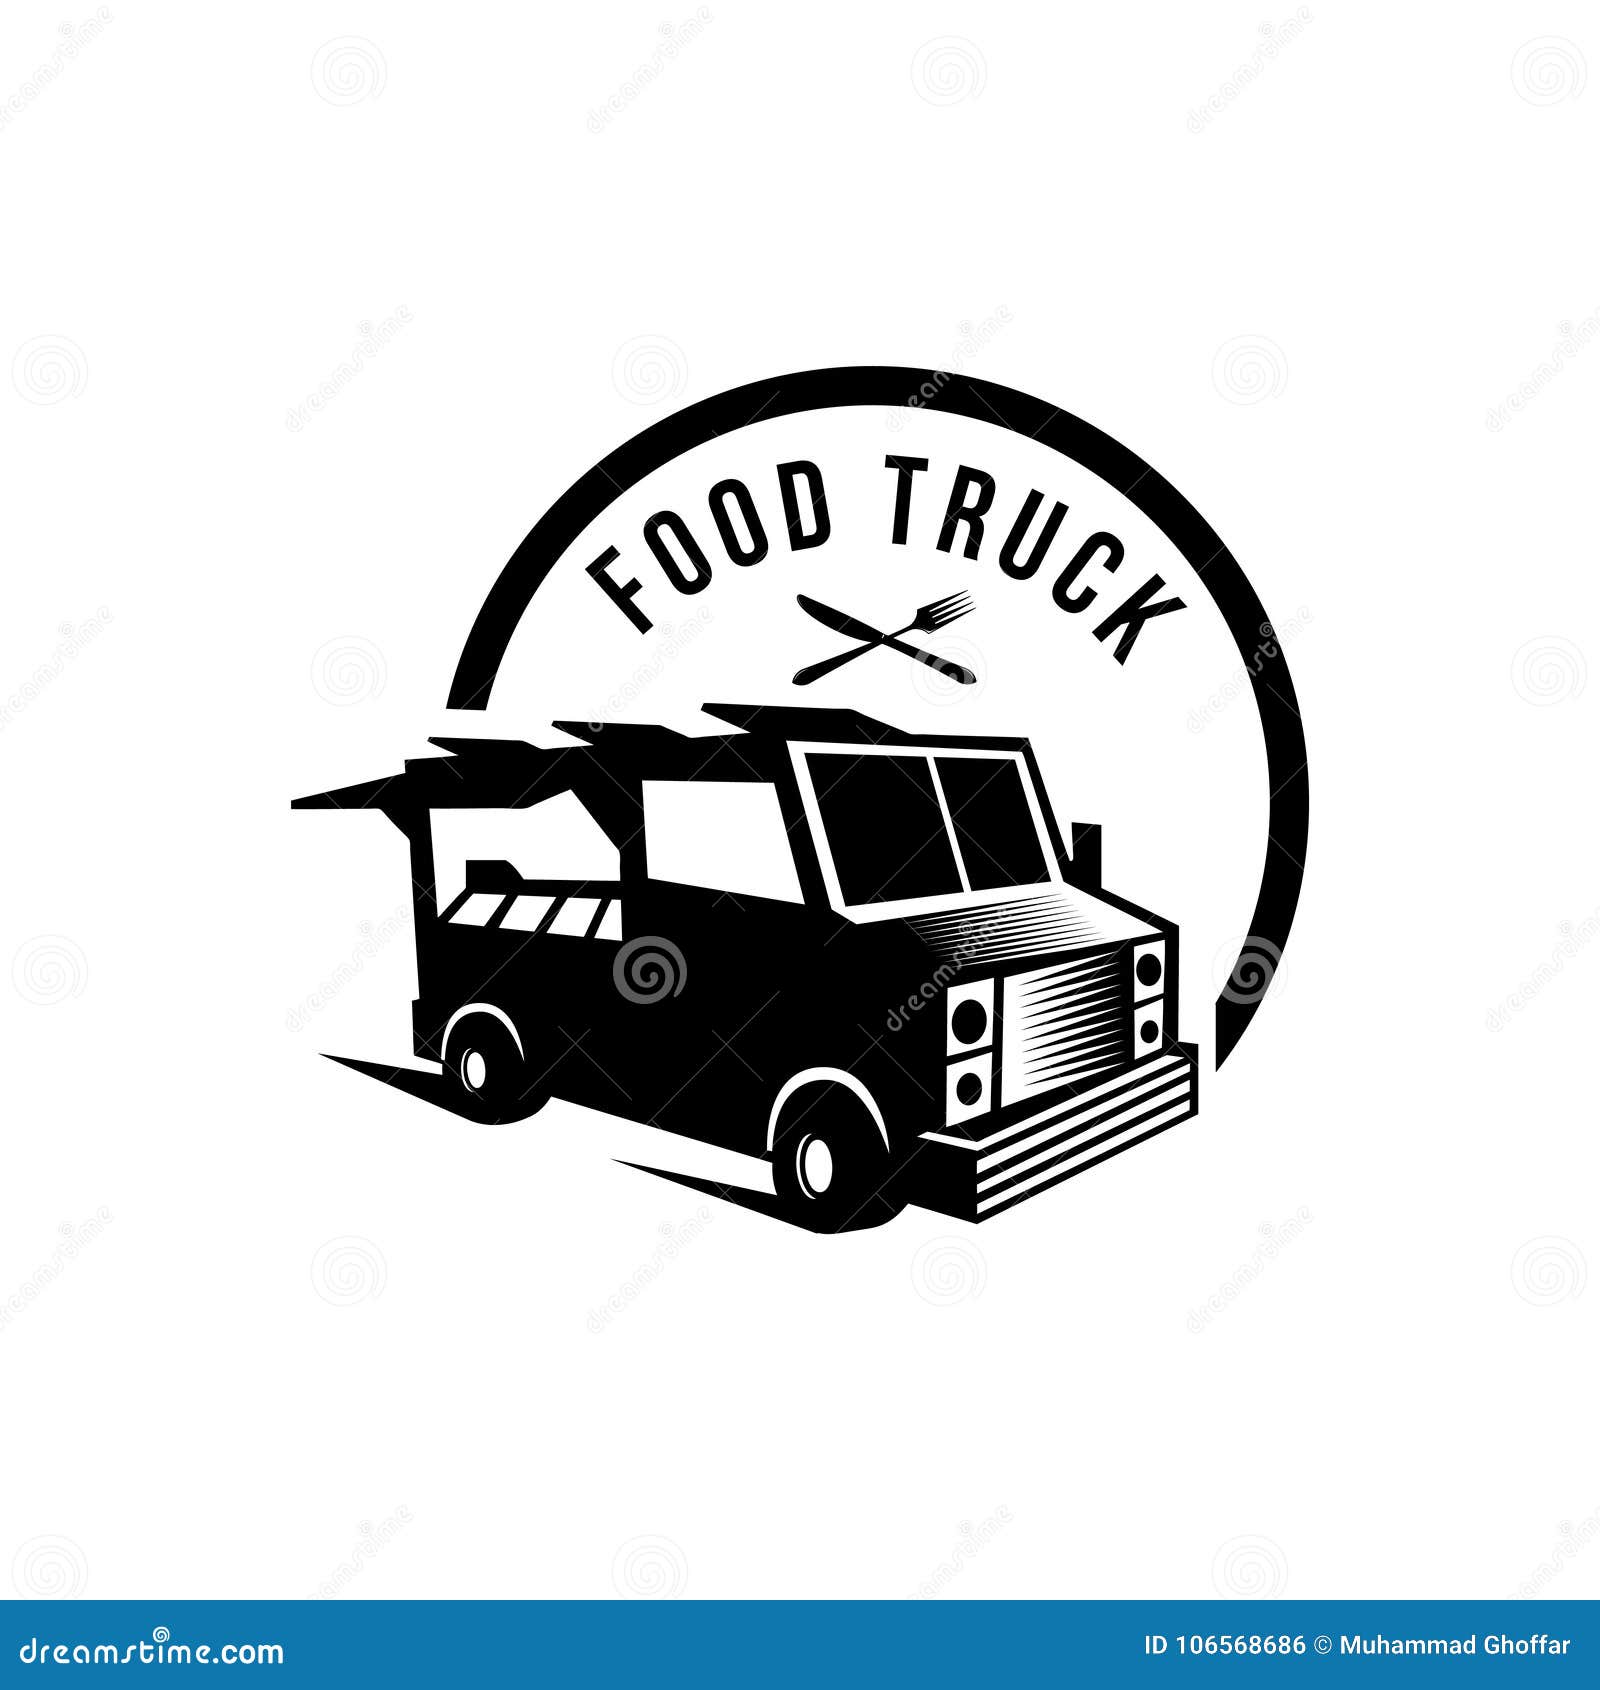 Vector Illustration Of Street Food Truck Graphic Badge Set Food